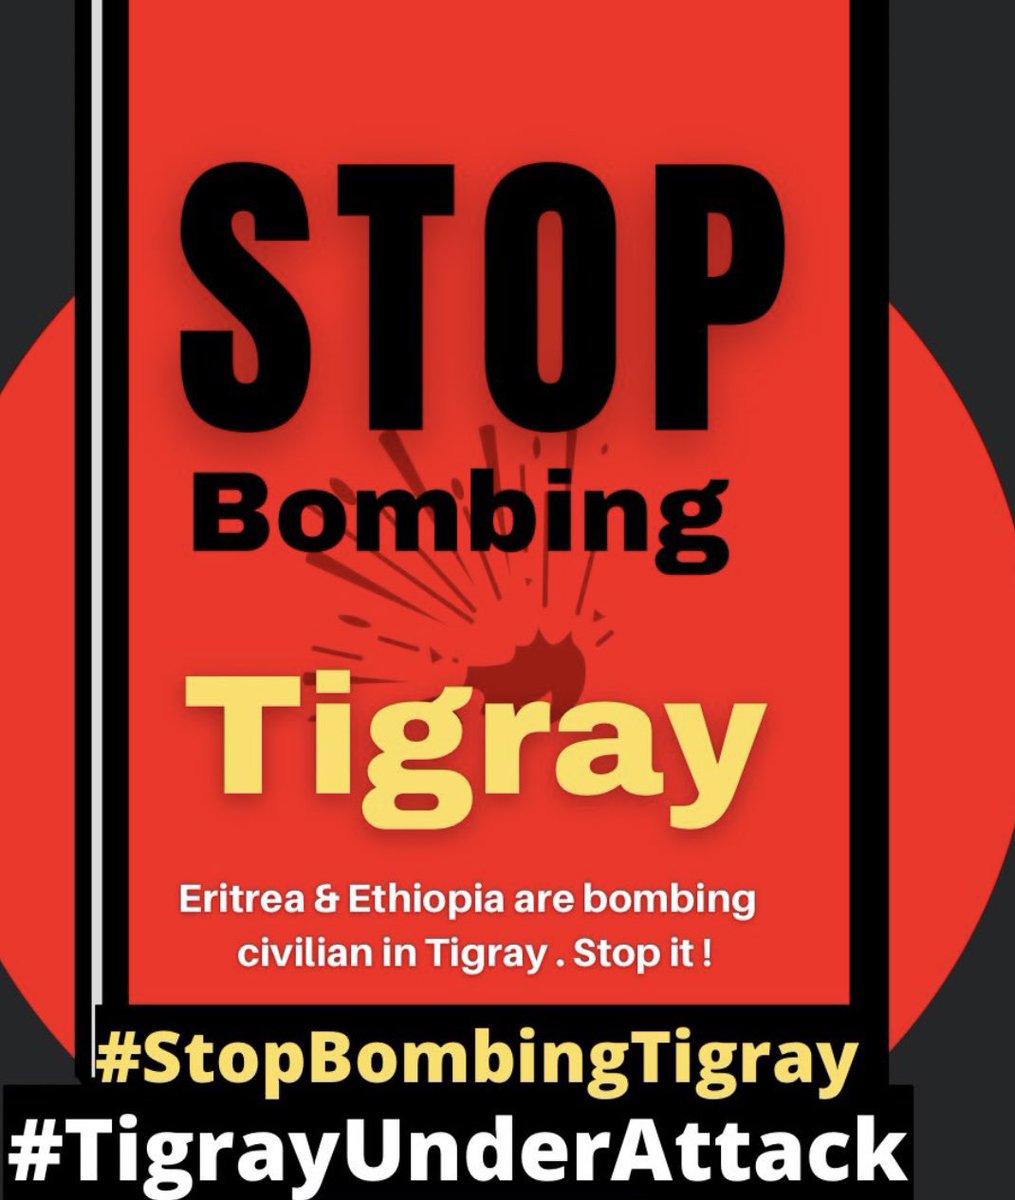 🚨🌎 Brake the Silent &endTigrayFamine #TigrayUnderAttack #TigrayGenocide #StopWarOnTigray 
#UNSC @UN_Women @antonioguterres @NorwayUN @dn_ledare @Aftonbladet @Expressen @BBCNews @AlJazeera @CNN @SvD @IntlCrimCourt @AnnLinde @JosepBorrellF @_AfricanUnion @Sverigesriksdag @POTUS